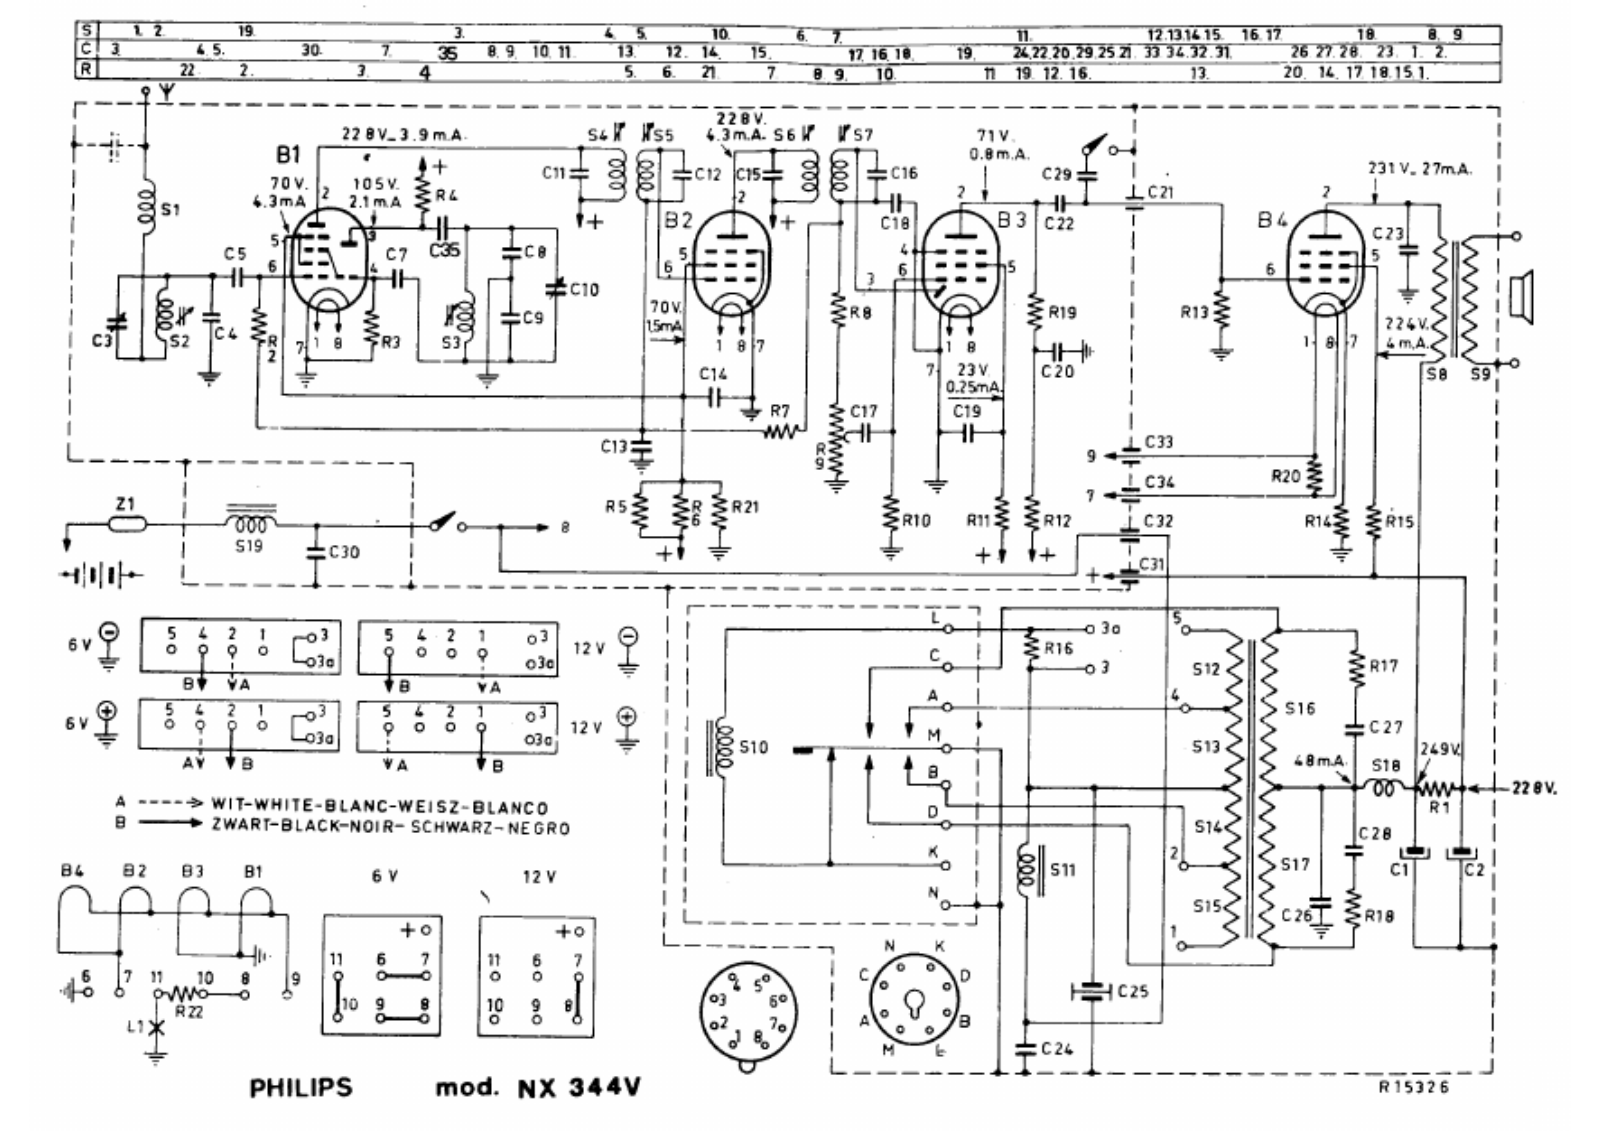 Philips nx344v schematic